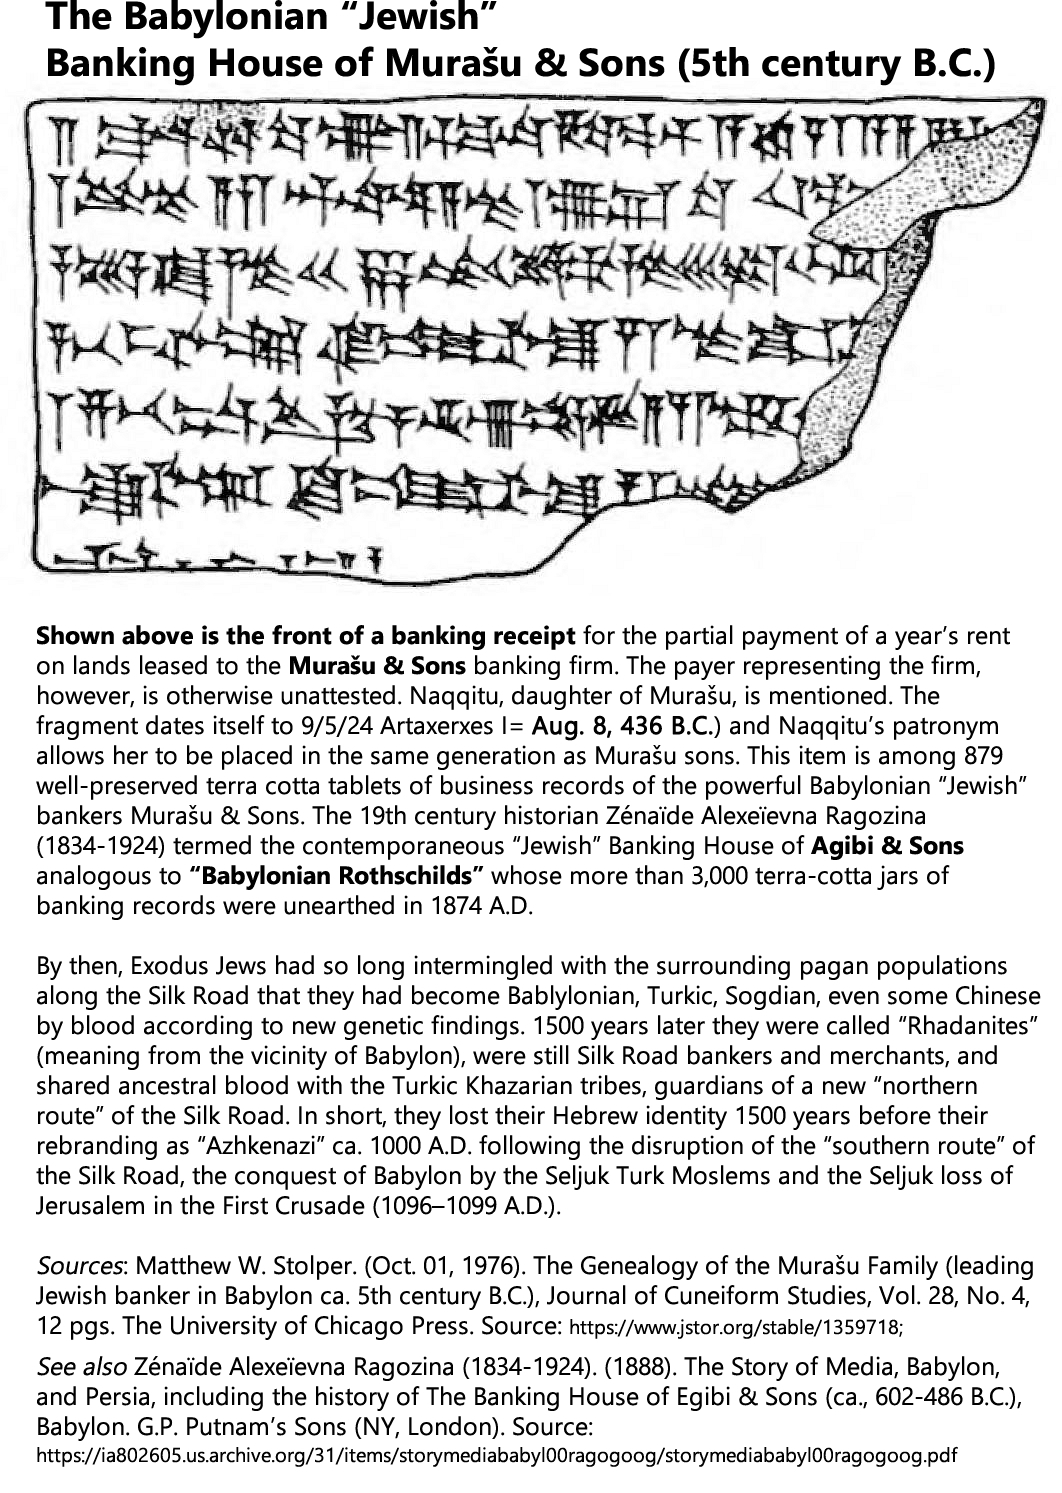 Matthew W. Stolper. (Oct. 01, 1976). The Genealogy of the Murašû Family (leading Jewish banker in Babylon ca. 5th century BCE), Journal of Cuneiform Studies, Vol. 28, No. 4, 12 pgs., PDF p. 13. The University of Chicago Press. 